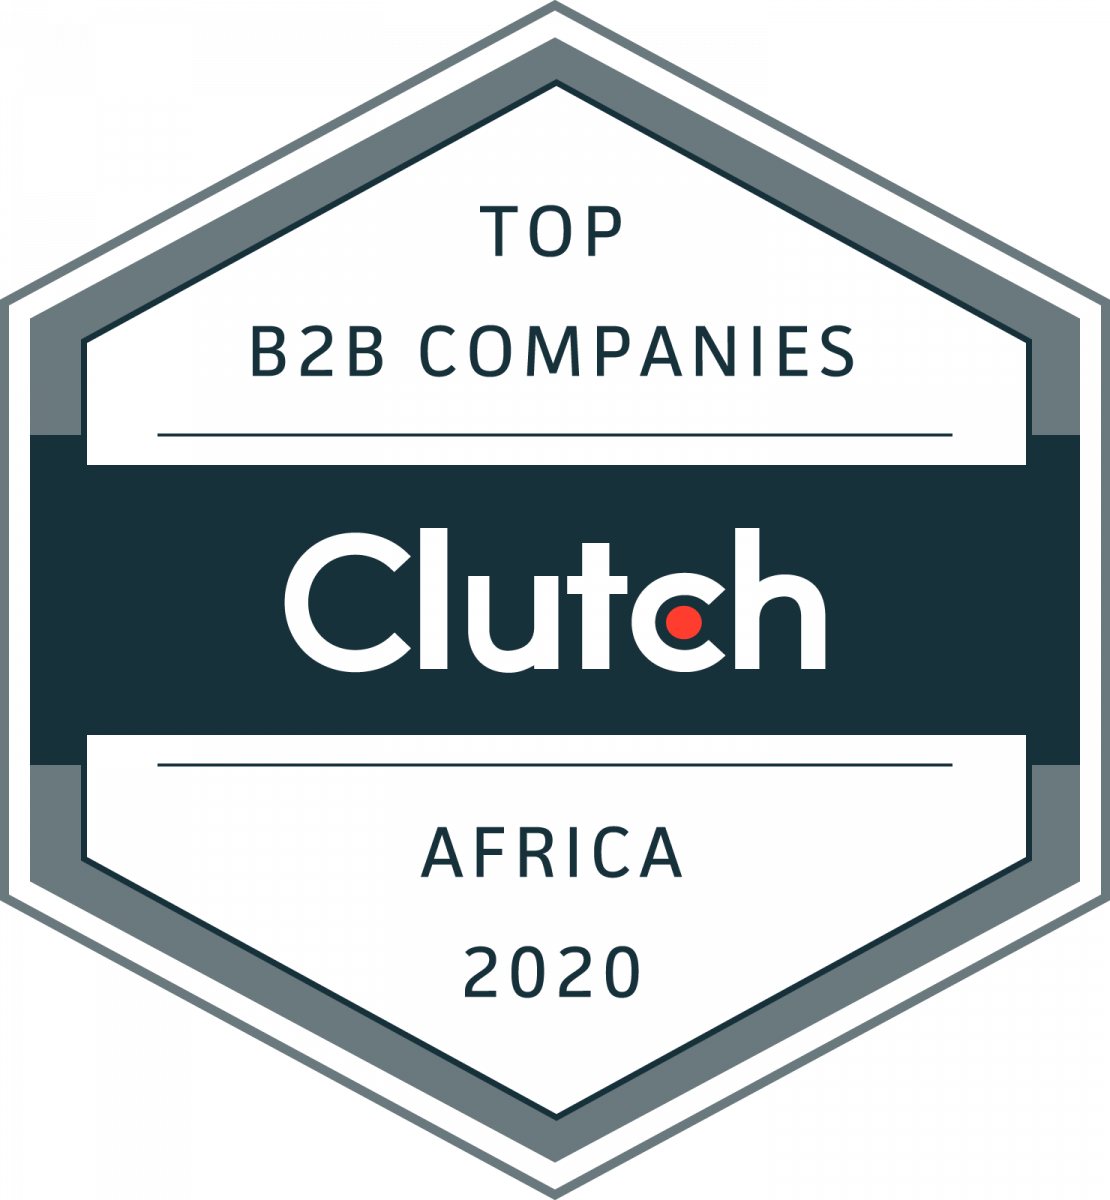 Top B2B Companies Africa 2020